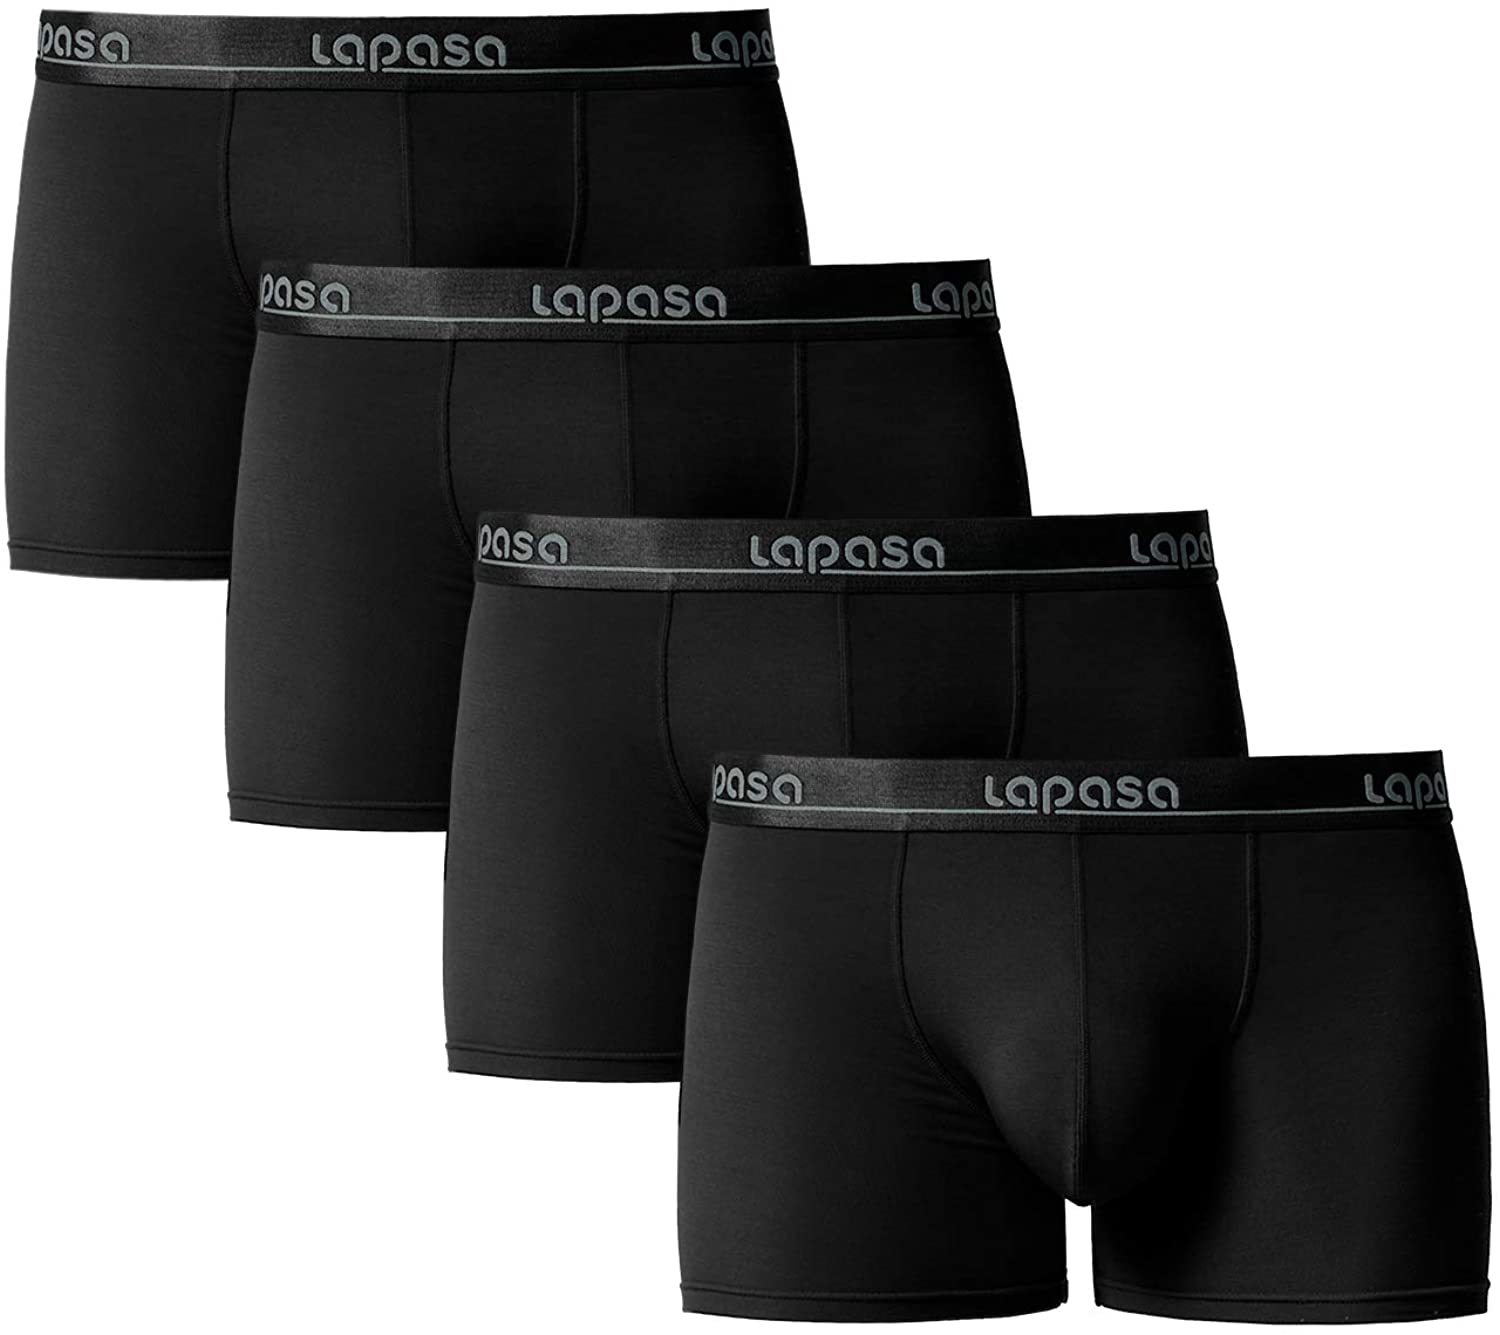 Buy LAPASA Men's Sport Boxer Briefs Mesh Travel Underwear Ultra